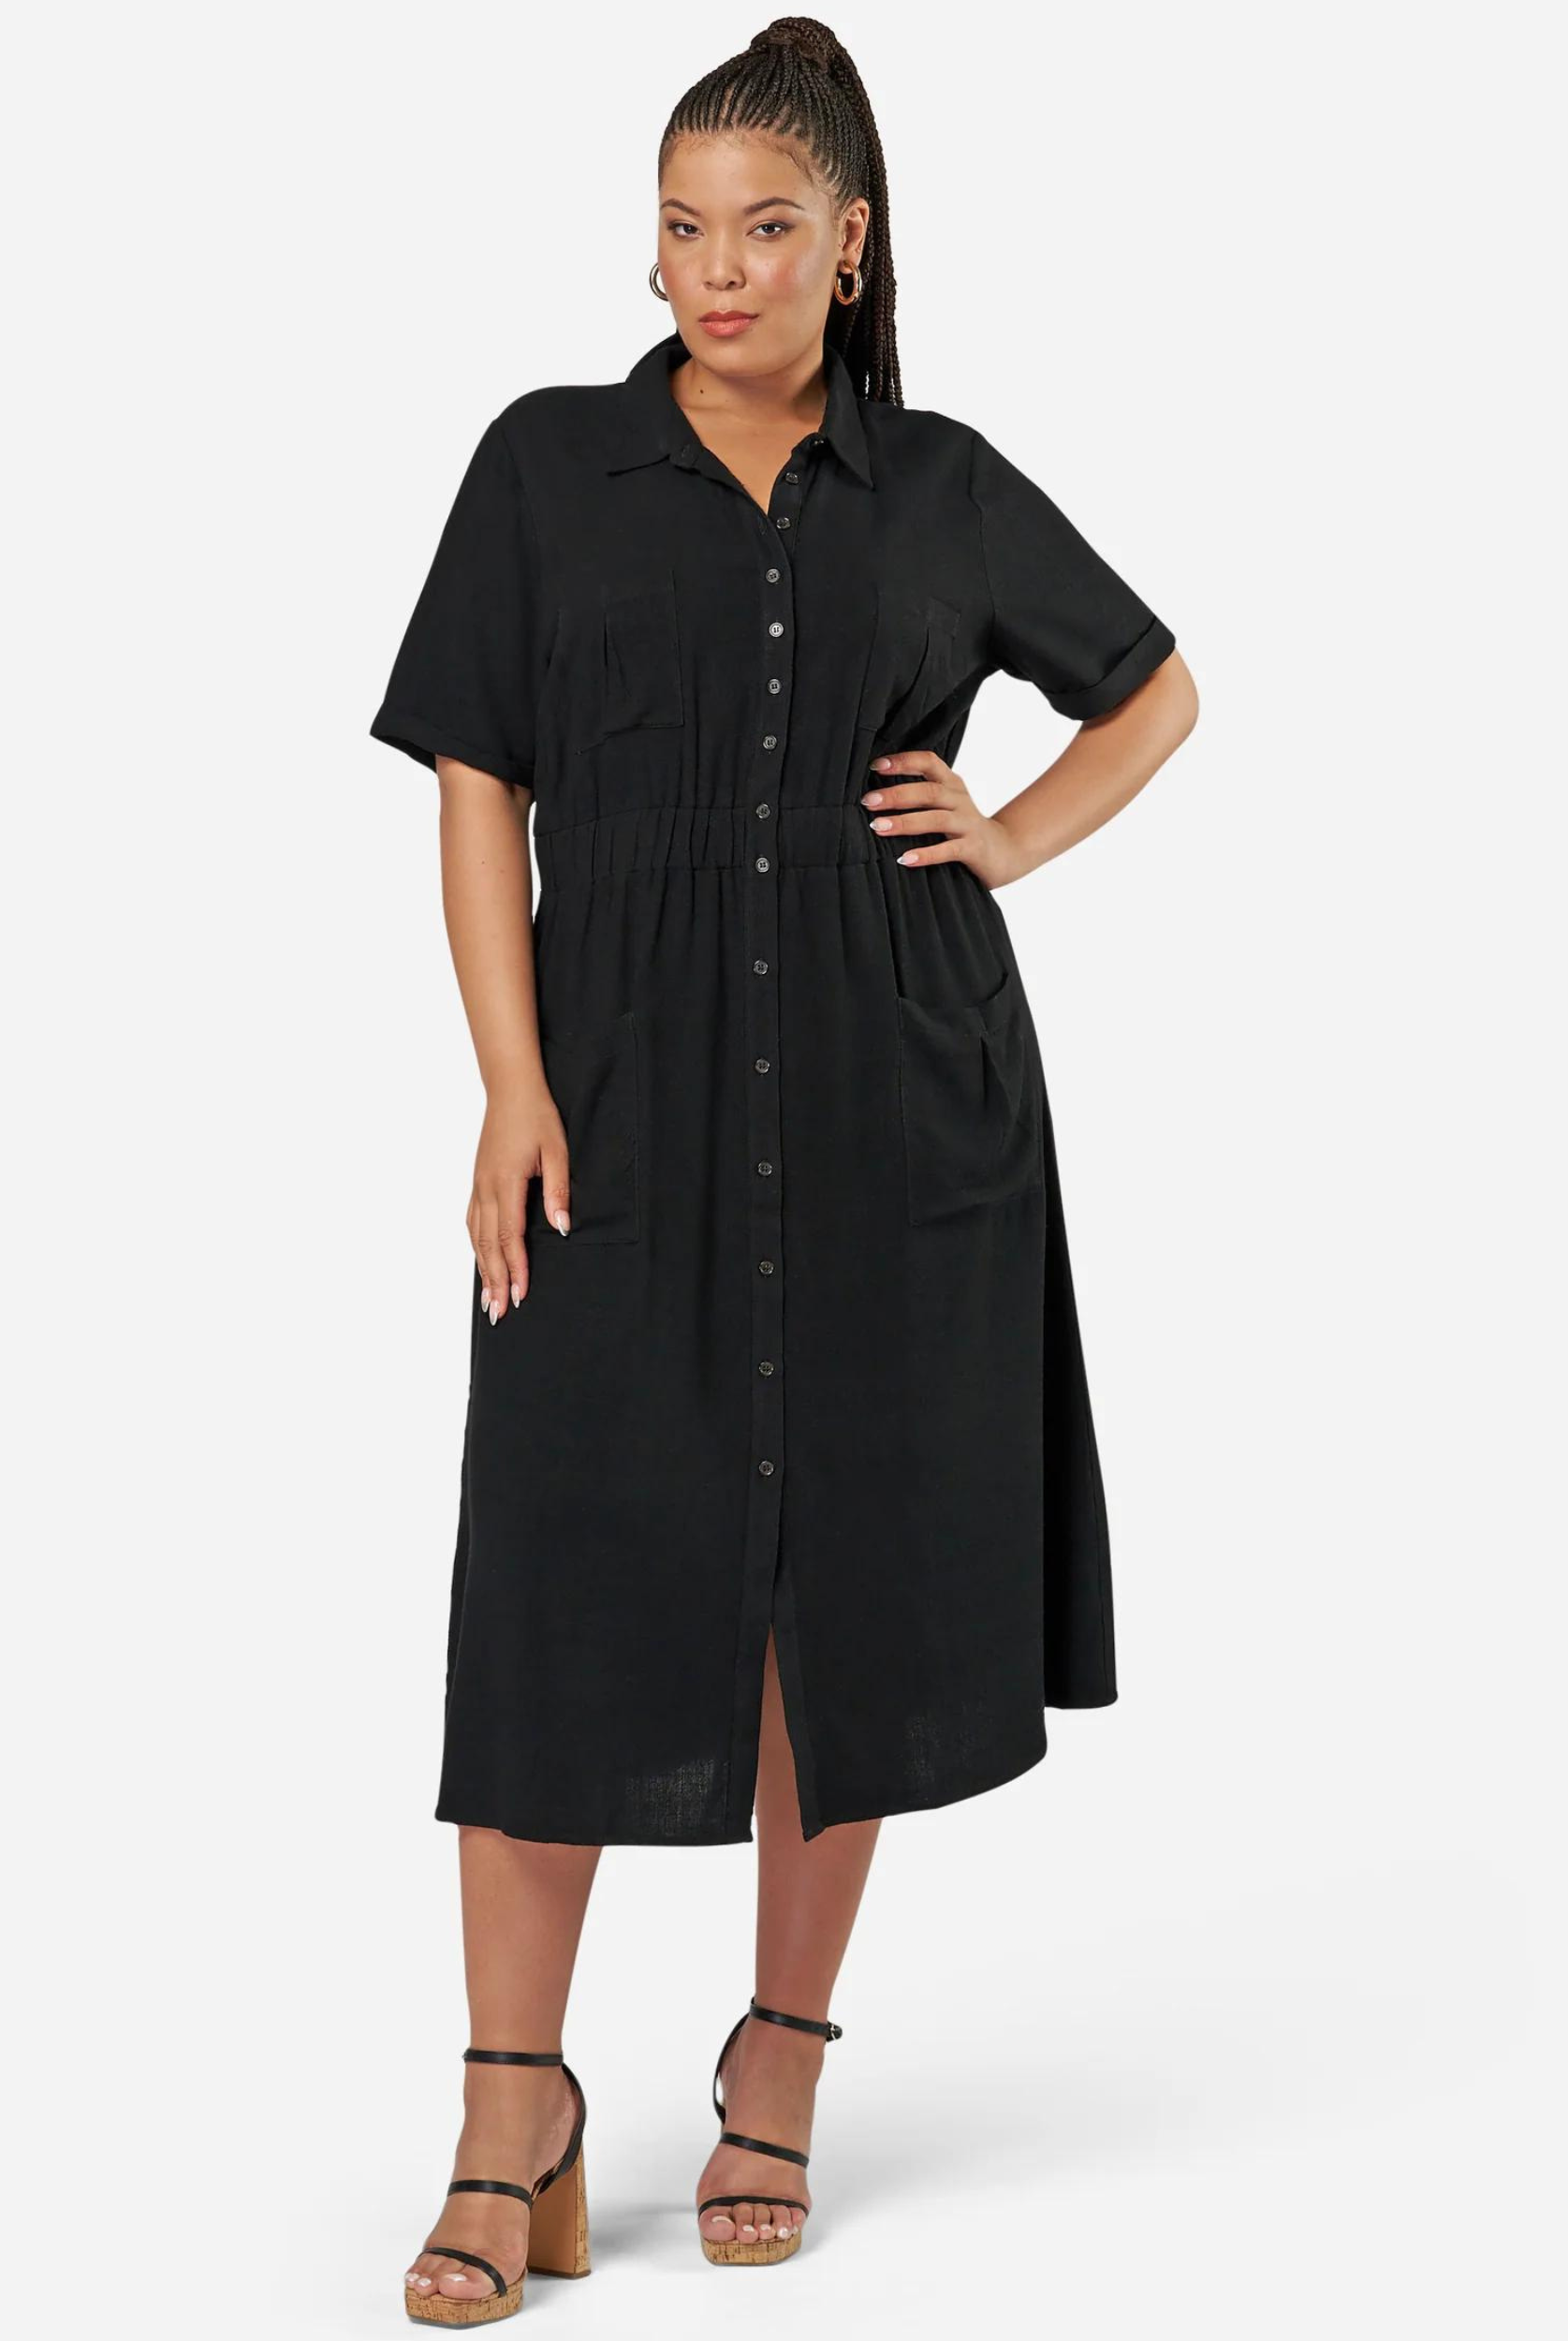 Curve model wearing a black shirt dress